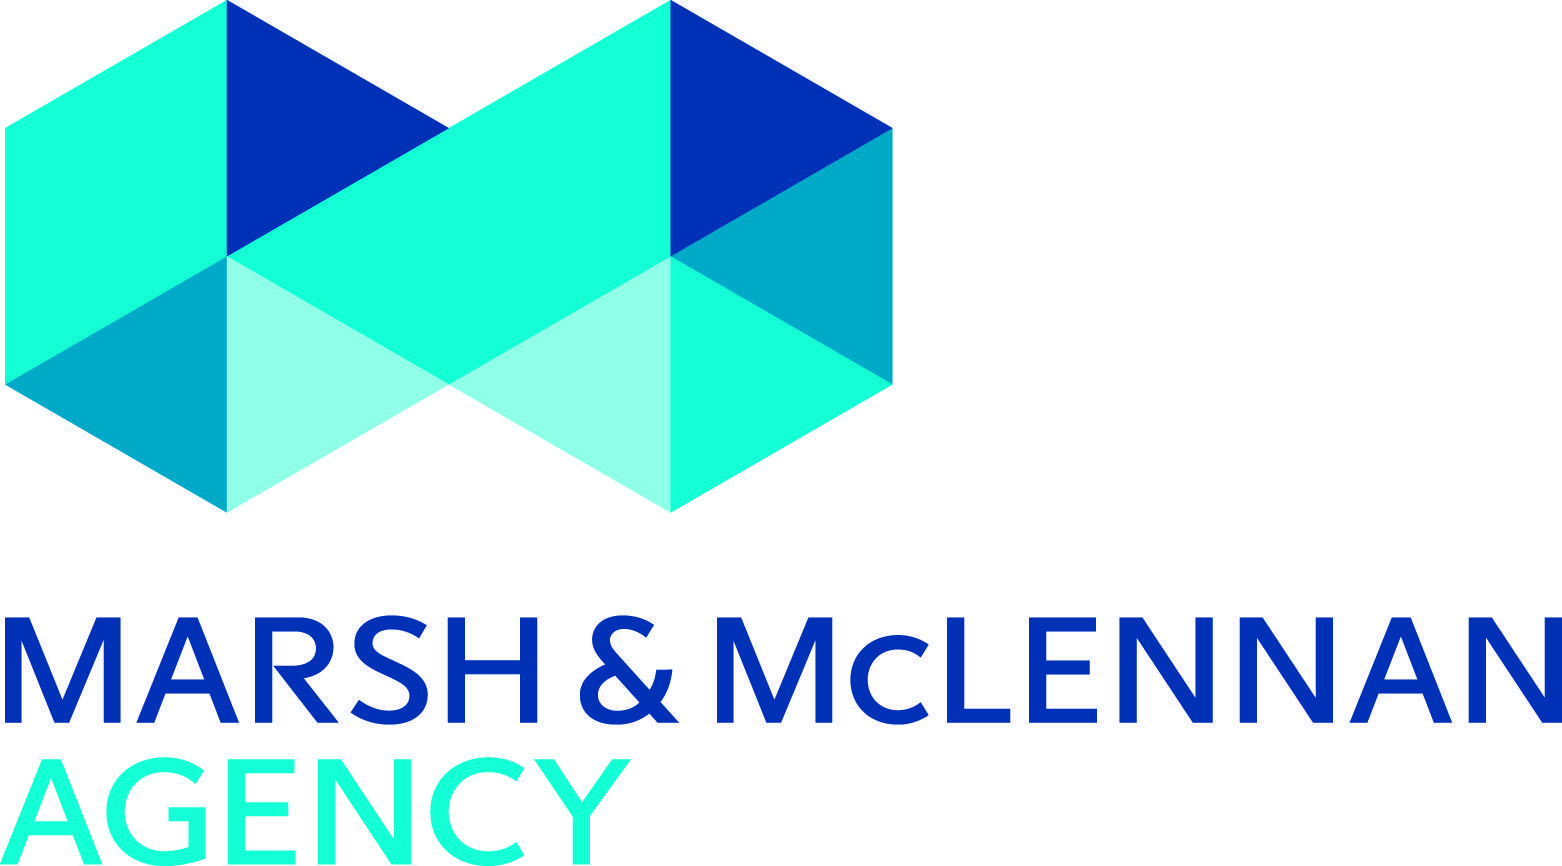 Marsh and McLennan Logo - Marsh & McLennan Logo | LOGOSURFER.COM